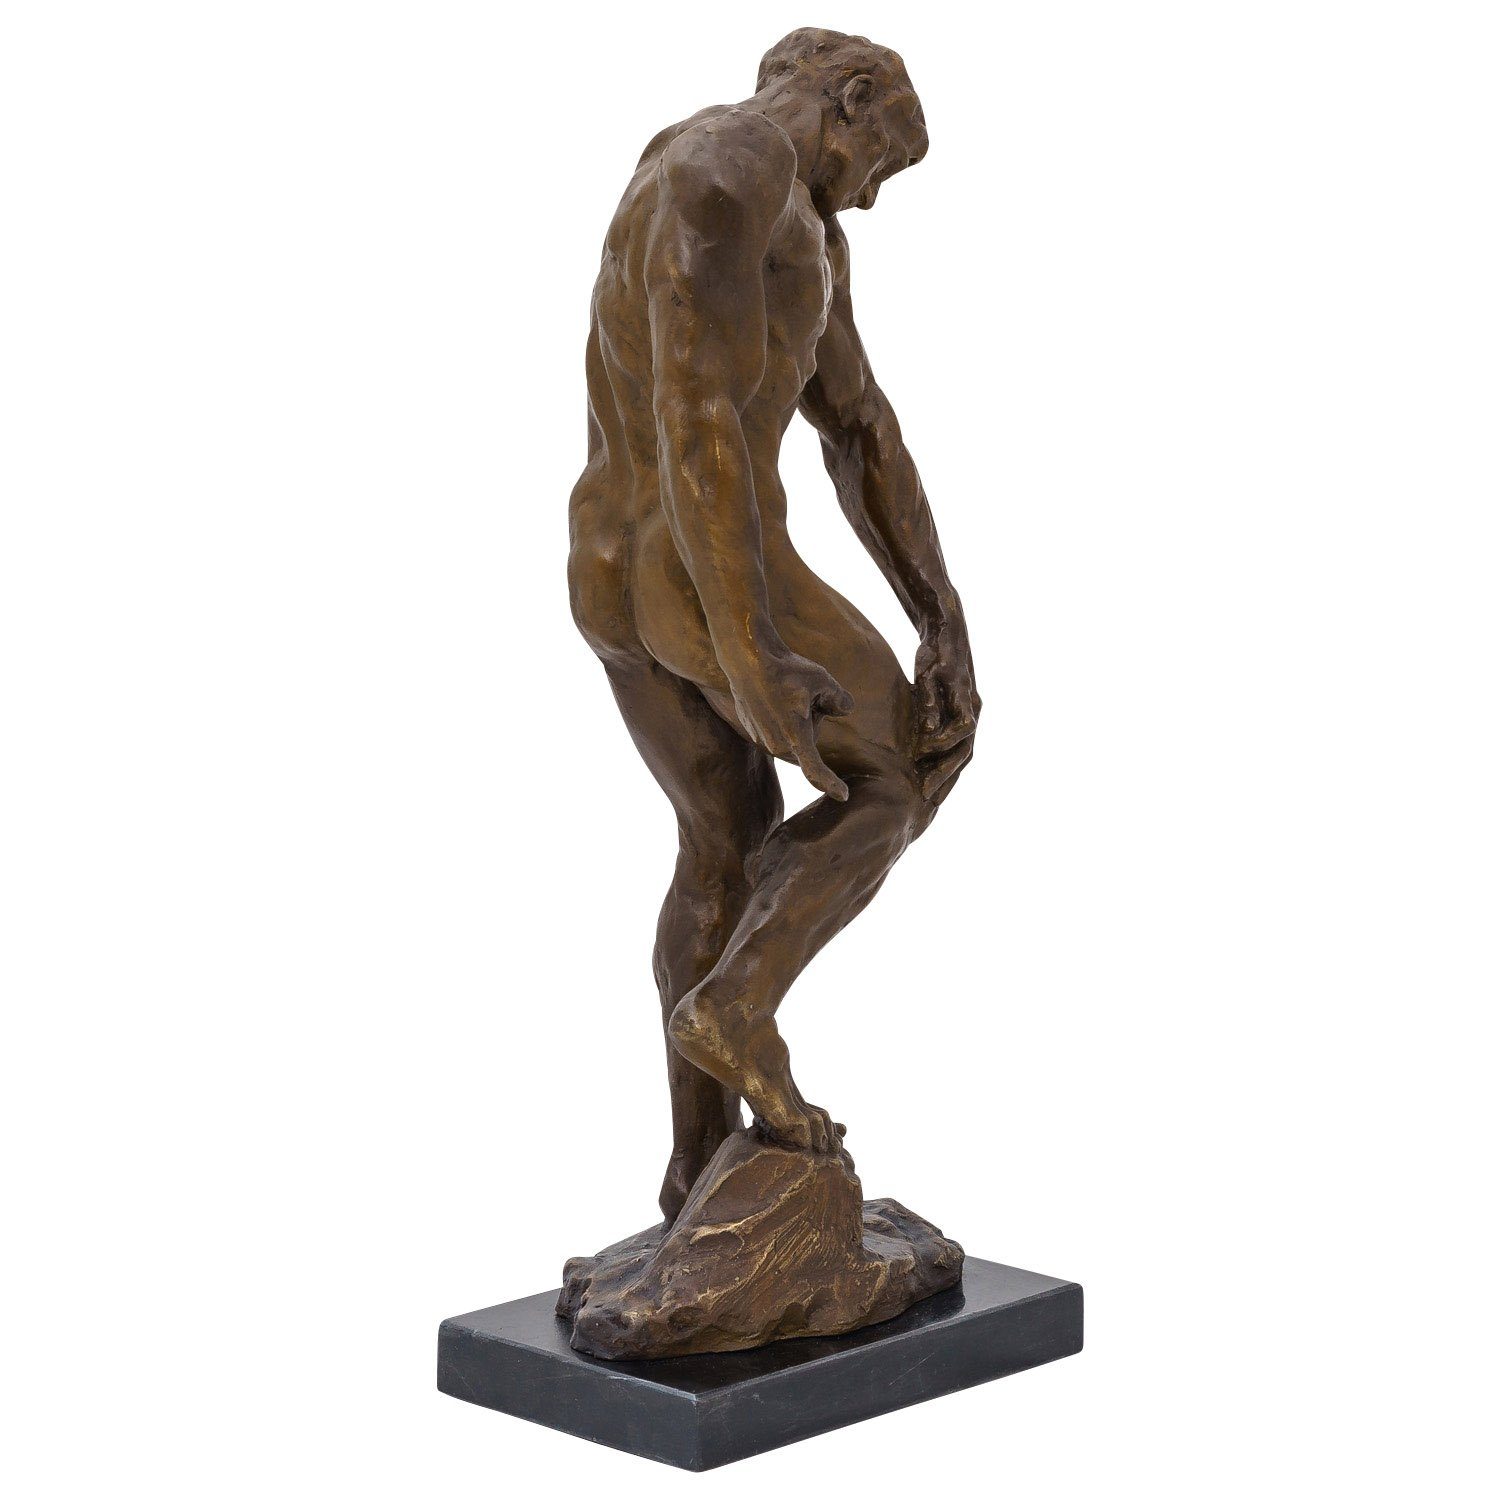 Aubaho Bronzeskulptur Stat Skulptur Rodin, Kopie, Bronze Figur Antik-Stil nach Adam im